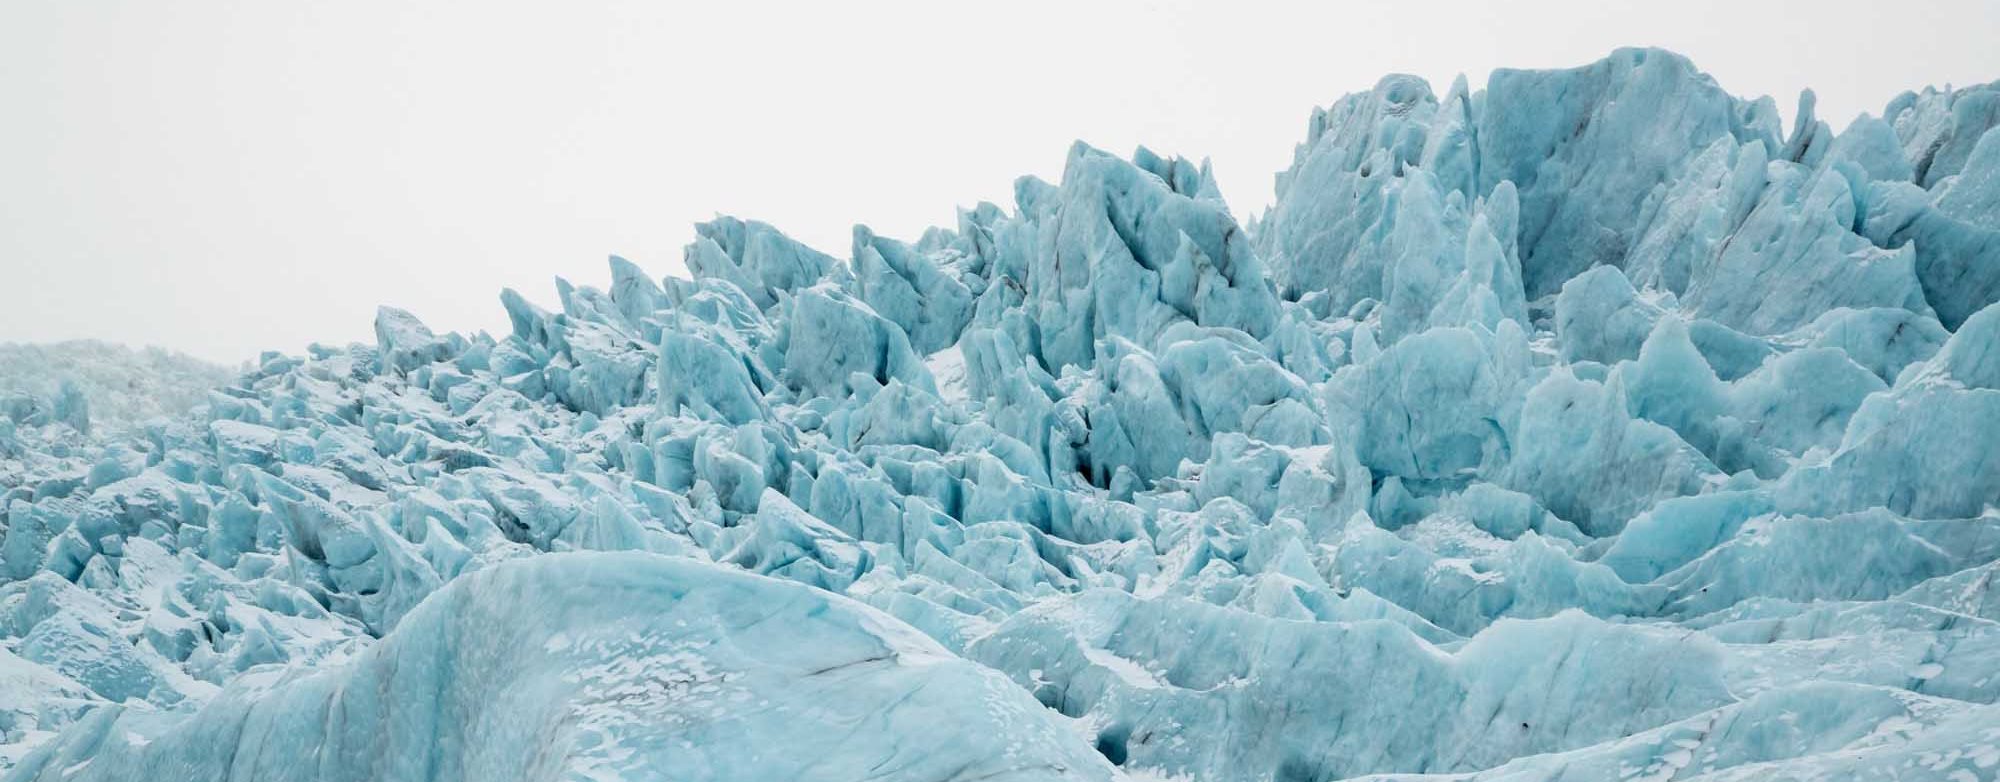 Fascinating ice sculptures on Falljökull